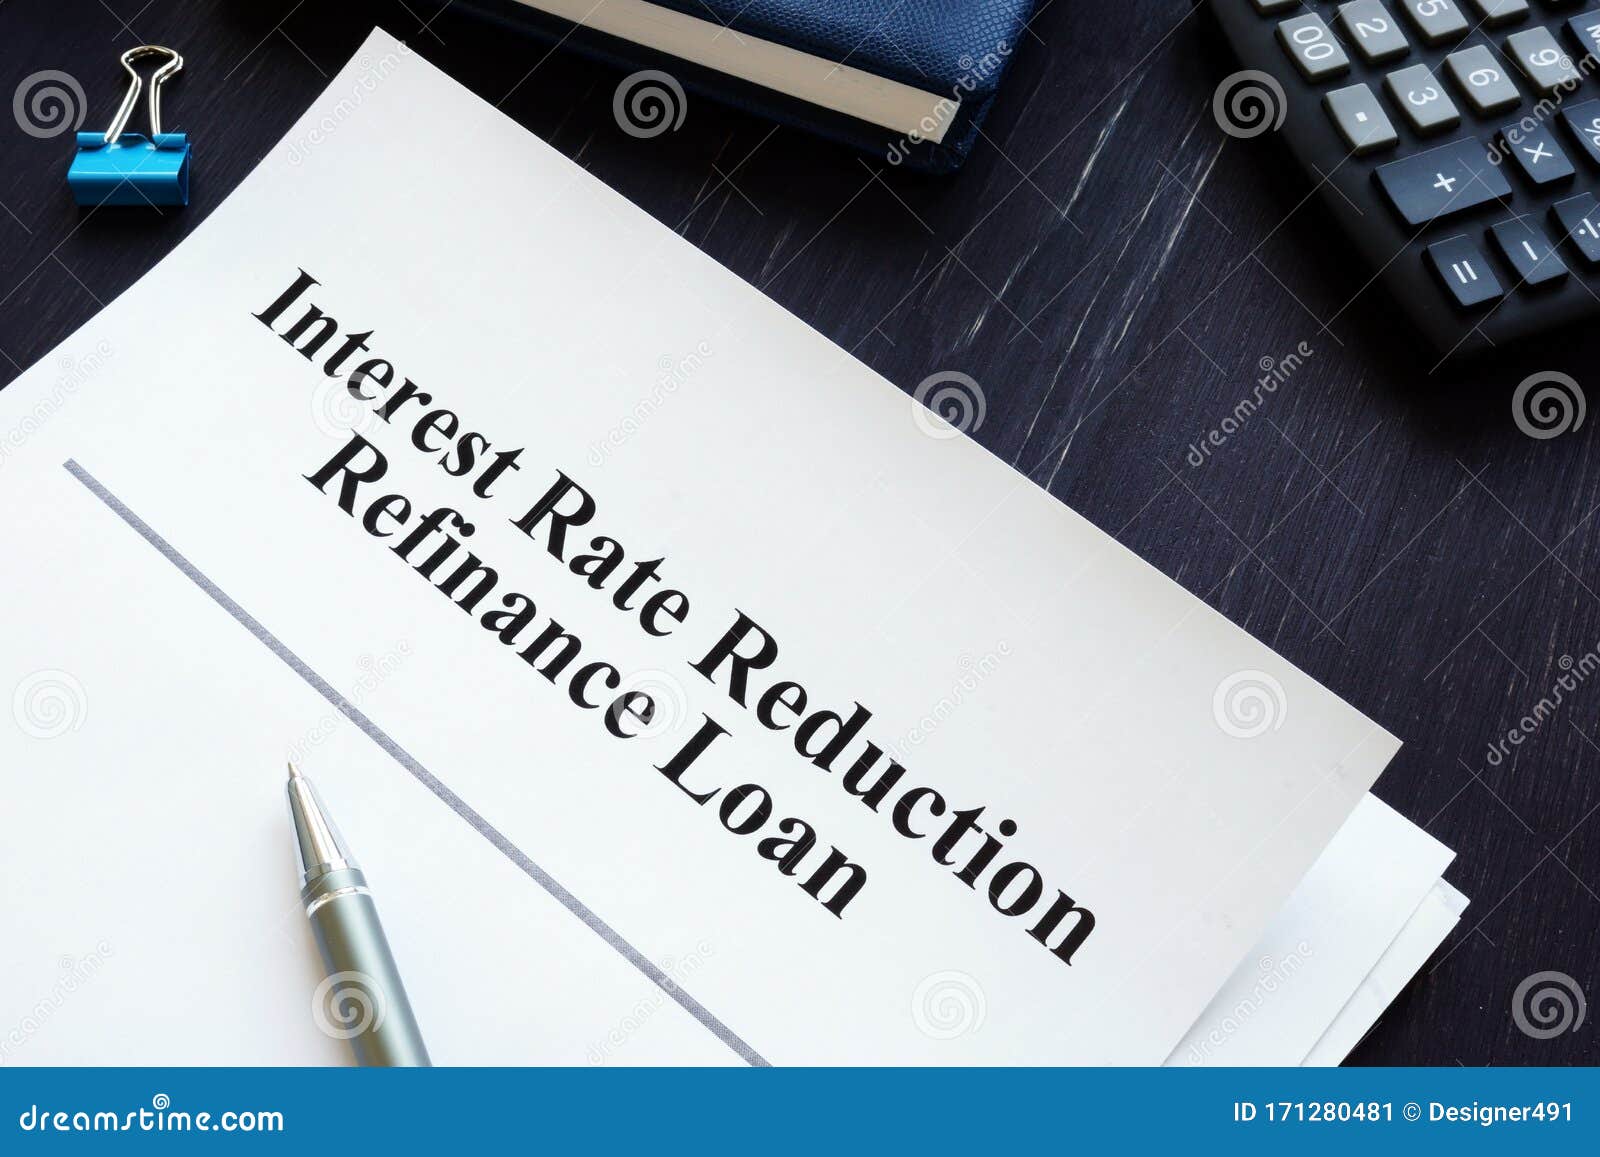 interest-rate-reduction-refinance-loan-irrrl-agreement-stock-image